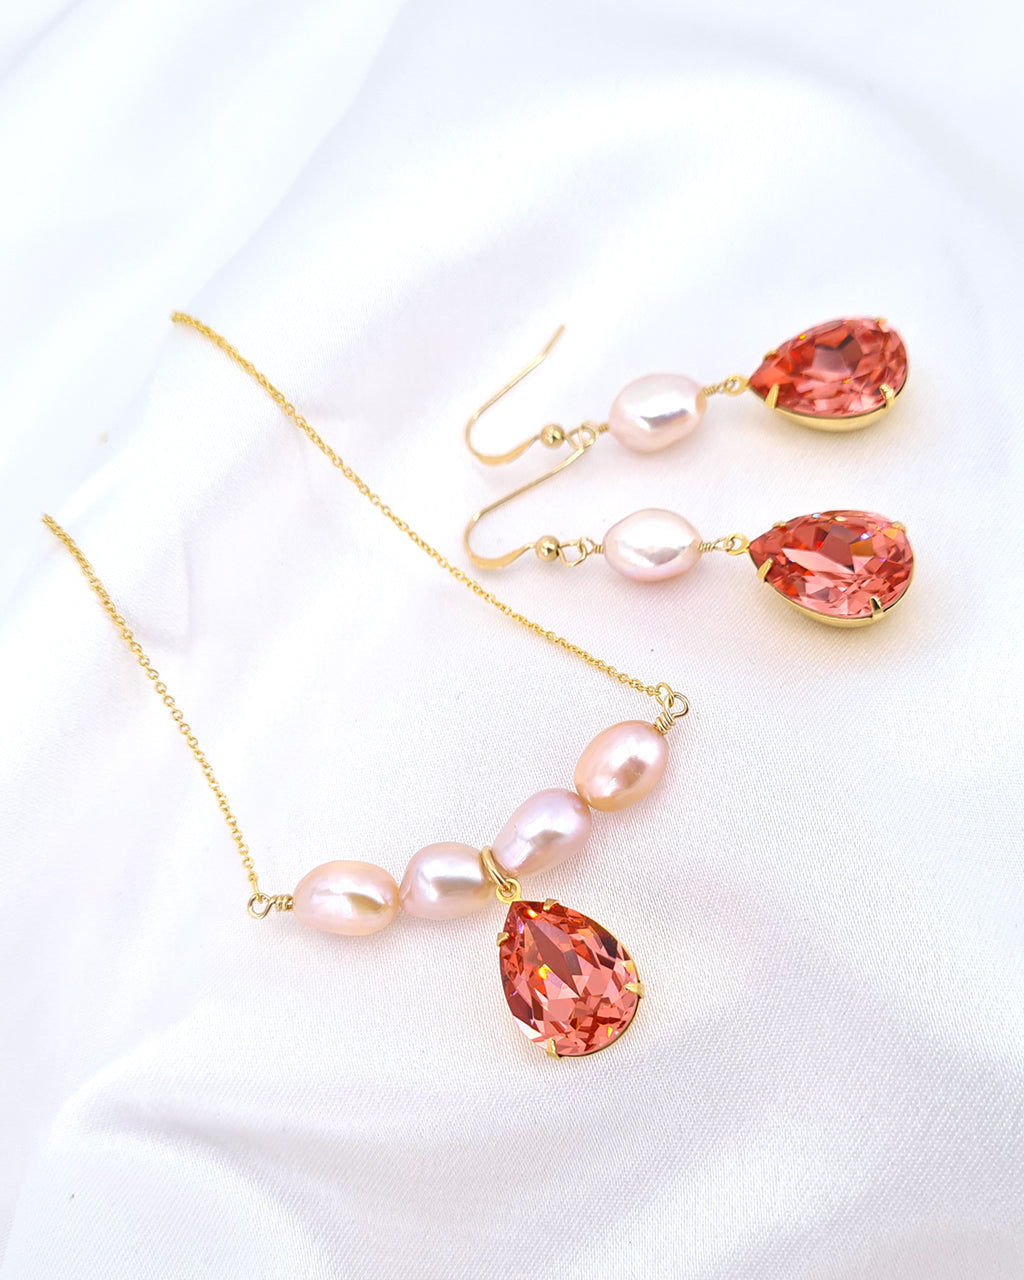 NWT HEIDI DAUS J'Adore Rose Necklace Pierced Earring Set Crystal PINK | eBay